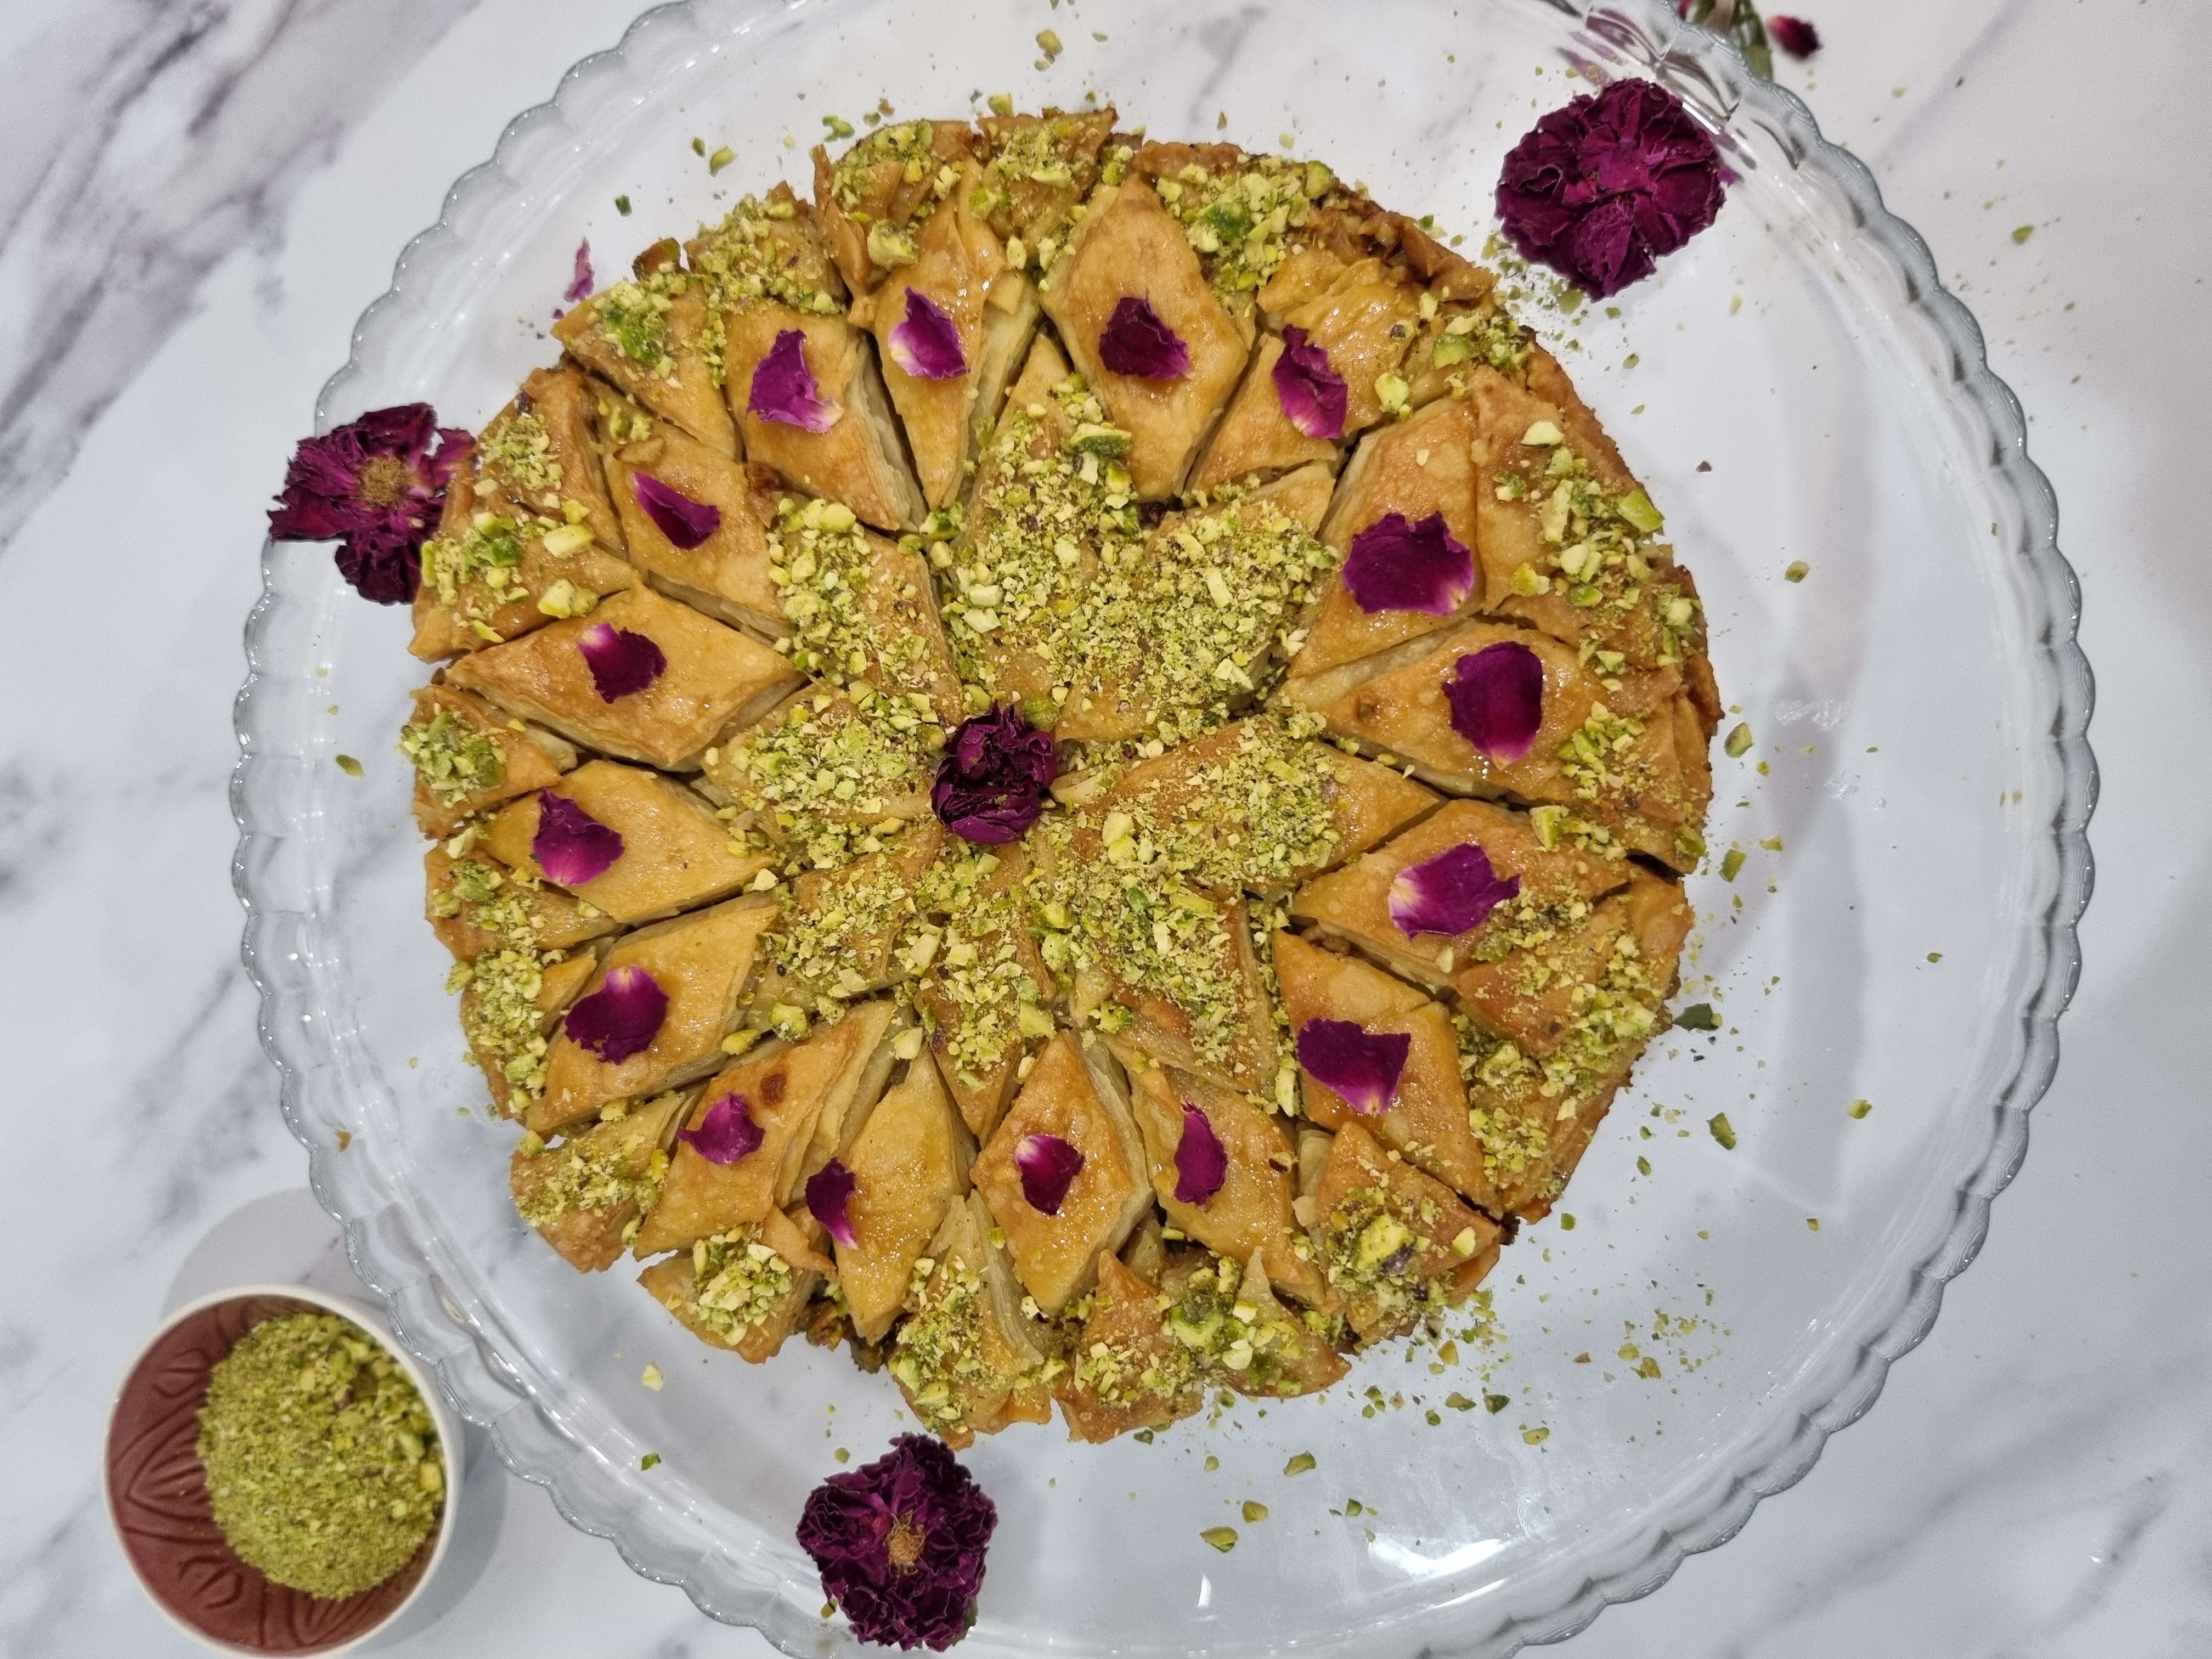 Homemade baklava with pistachios and rose petals